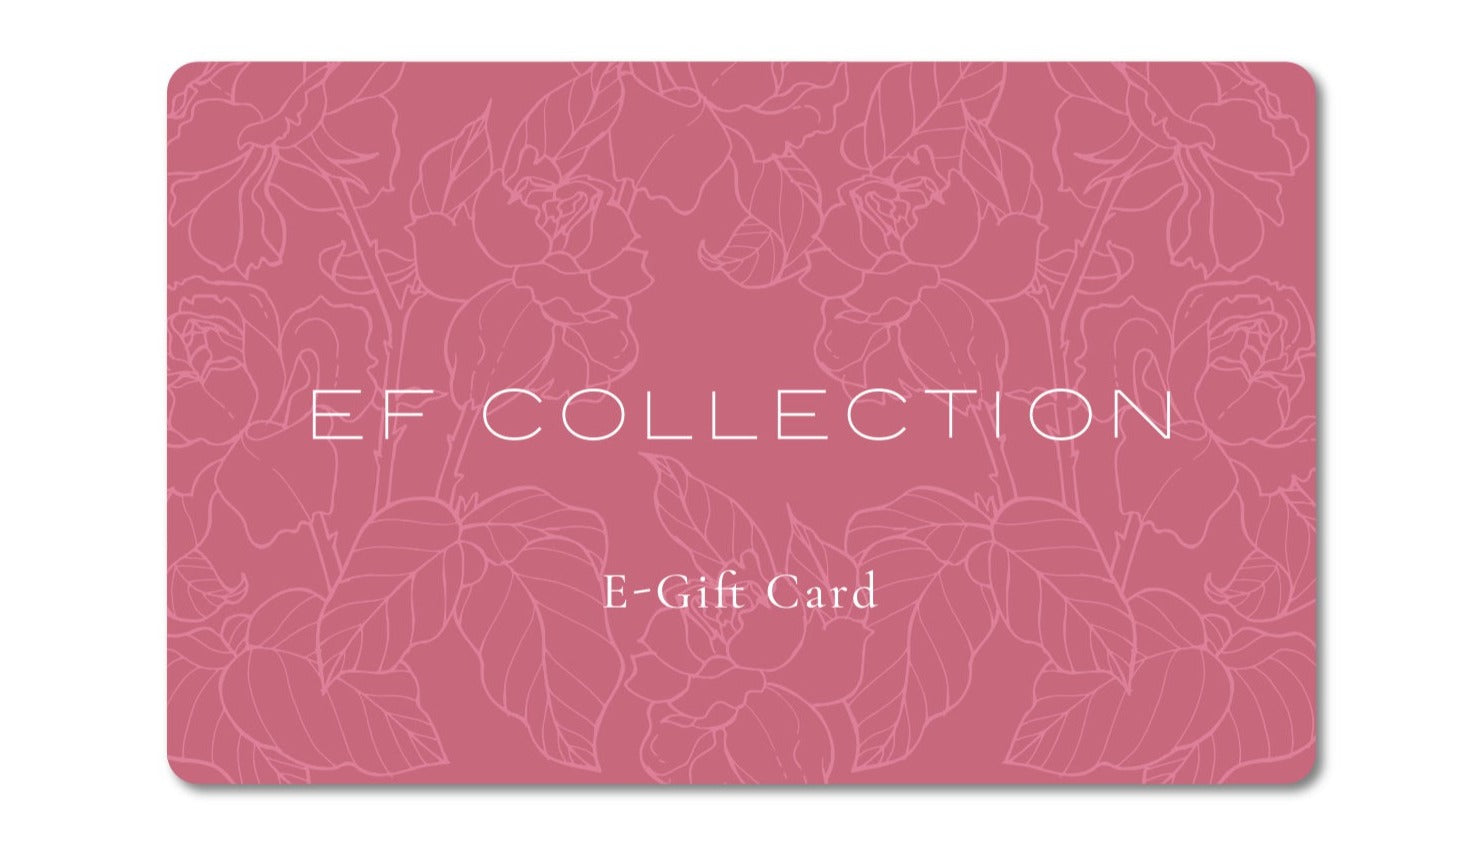 EF Collection E-Gift Card